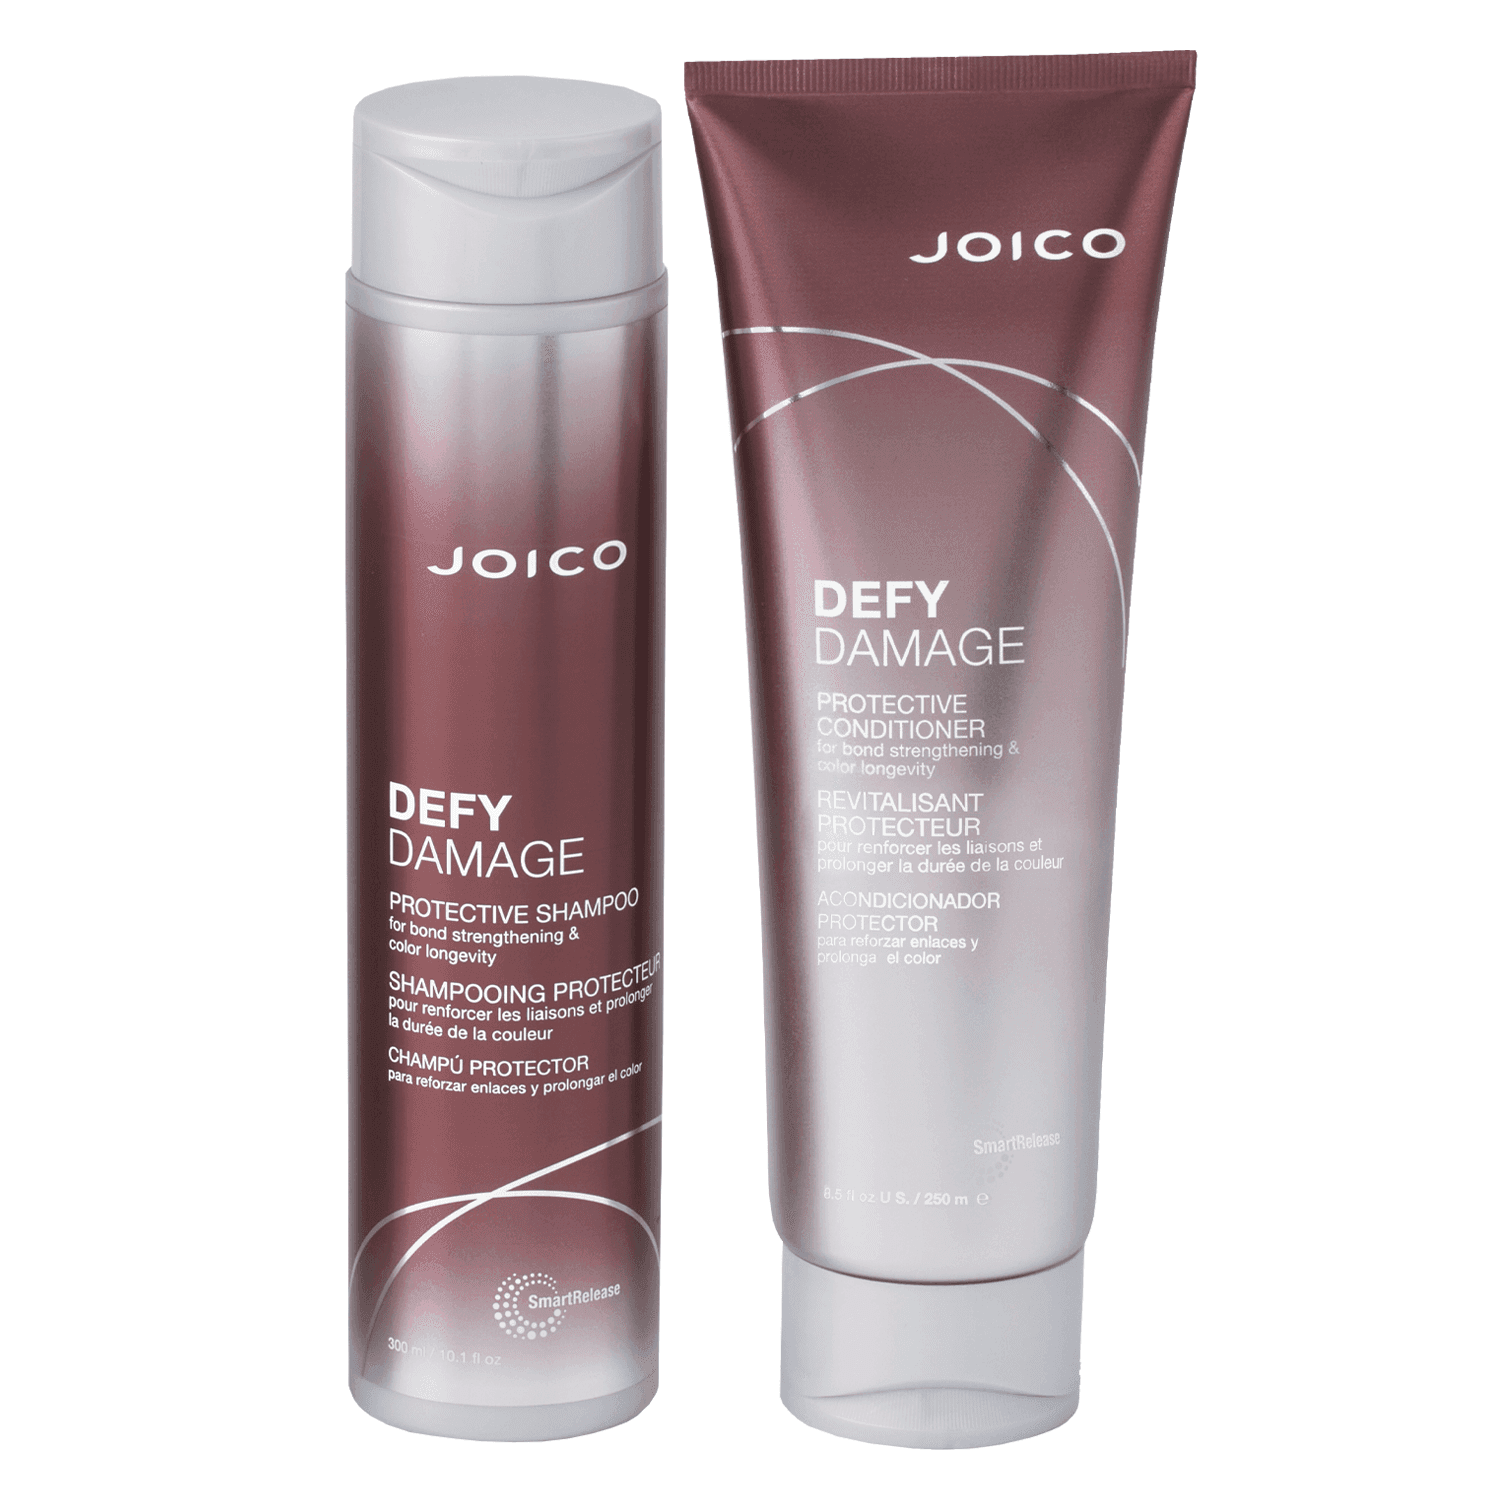 Defy Damage - Protective Shampoo & Conditioner Duo Set